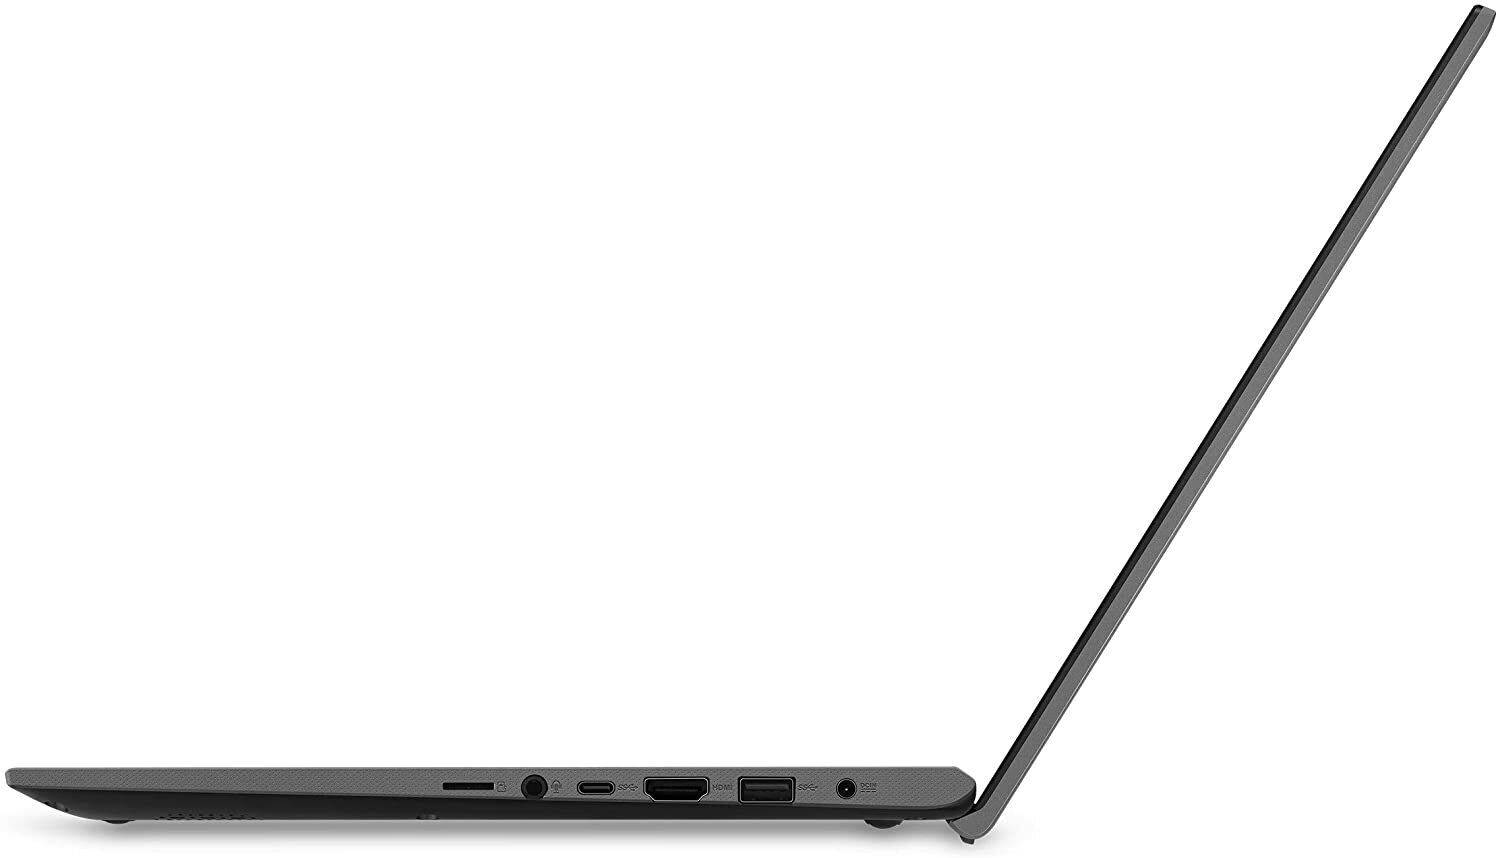 ASUS VivoBook 15 F515 Thin and Light Laptop, 15.6” FHD Display, Intel Core  i3-1005G1 Processor, 4GB DDR4 RAM, 128GB PCIe SSD, Fingerprint Reader